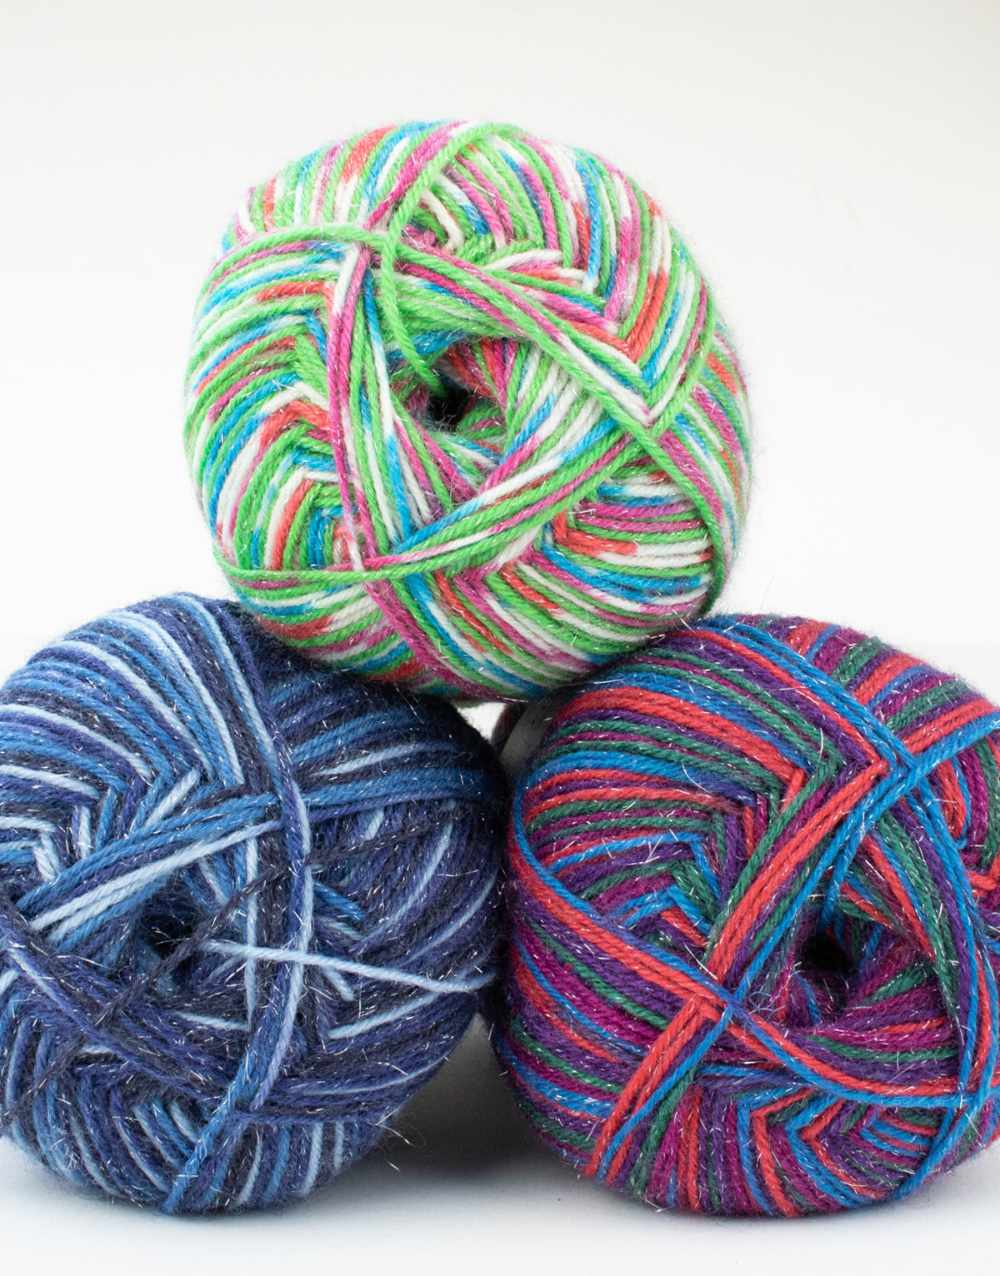 Cotton Yarn Sinfonia, 100% Cotton Yarn, Dk Yarn, Knitting Yarn, Croche –  Cutie Outfits by Belle